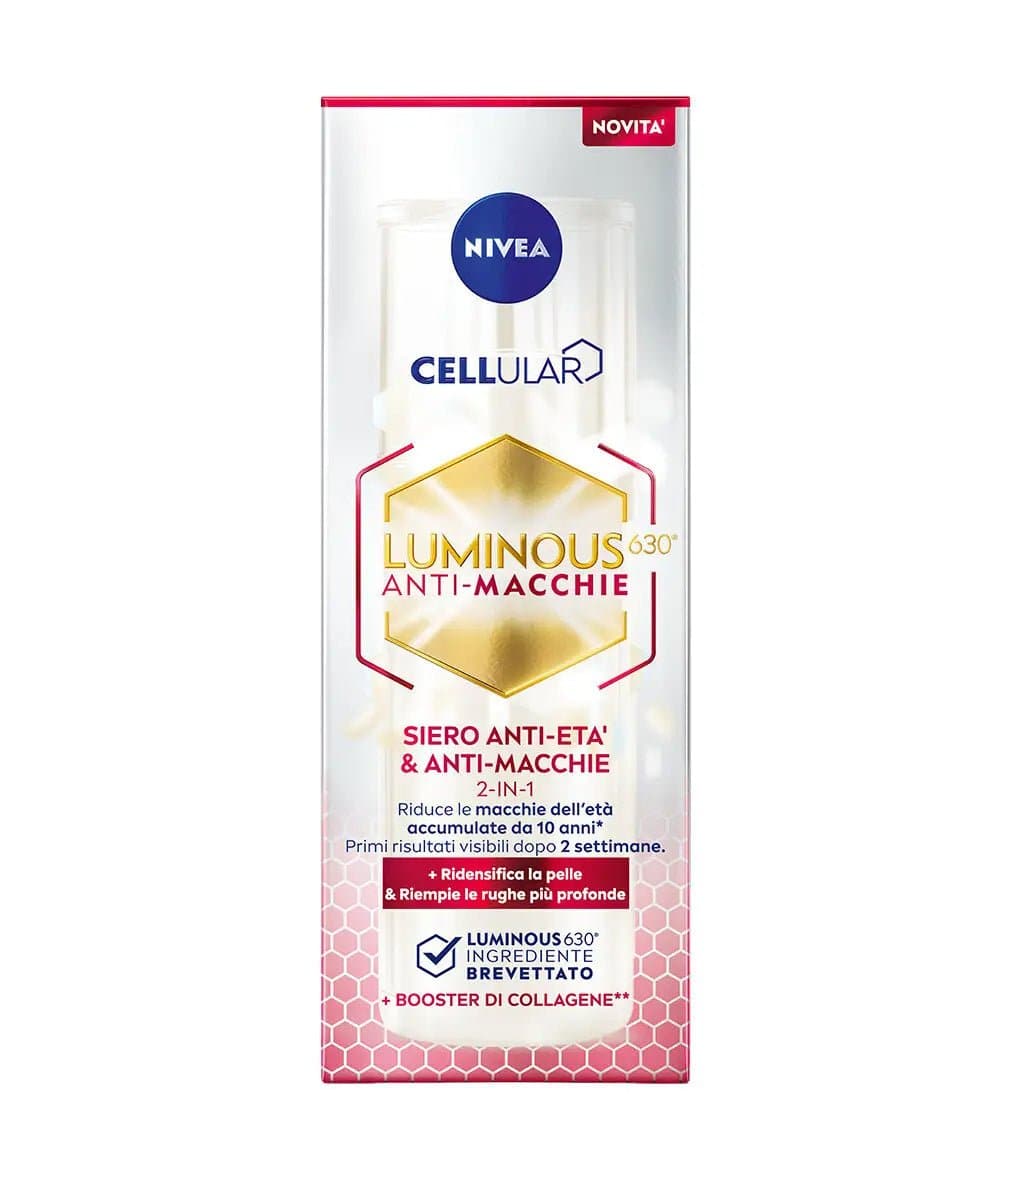 Nivea Cellular Luminous 630 Siero Anti Età e Antimacchie 2in1 con Booster di Collagene - Jasmine Parfums- [ean]